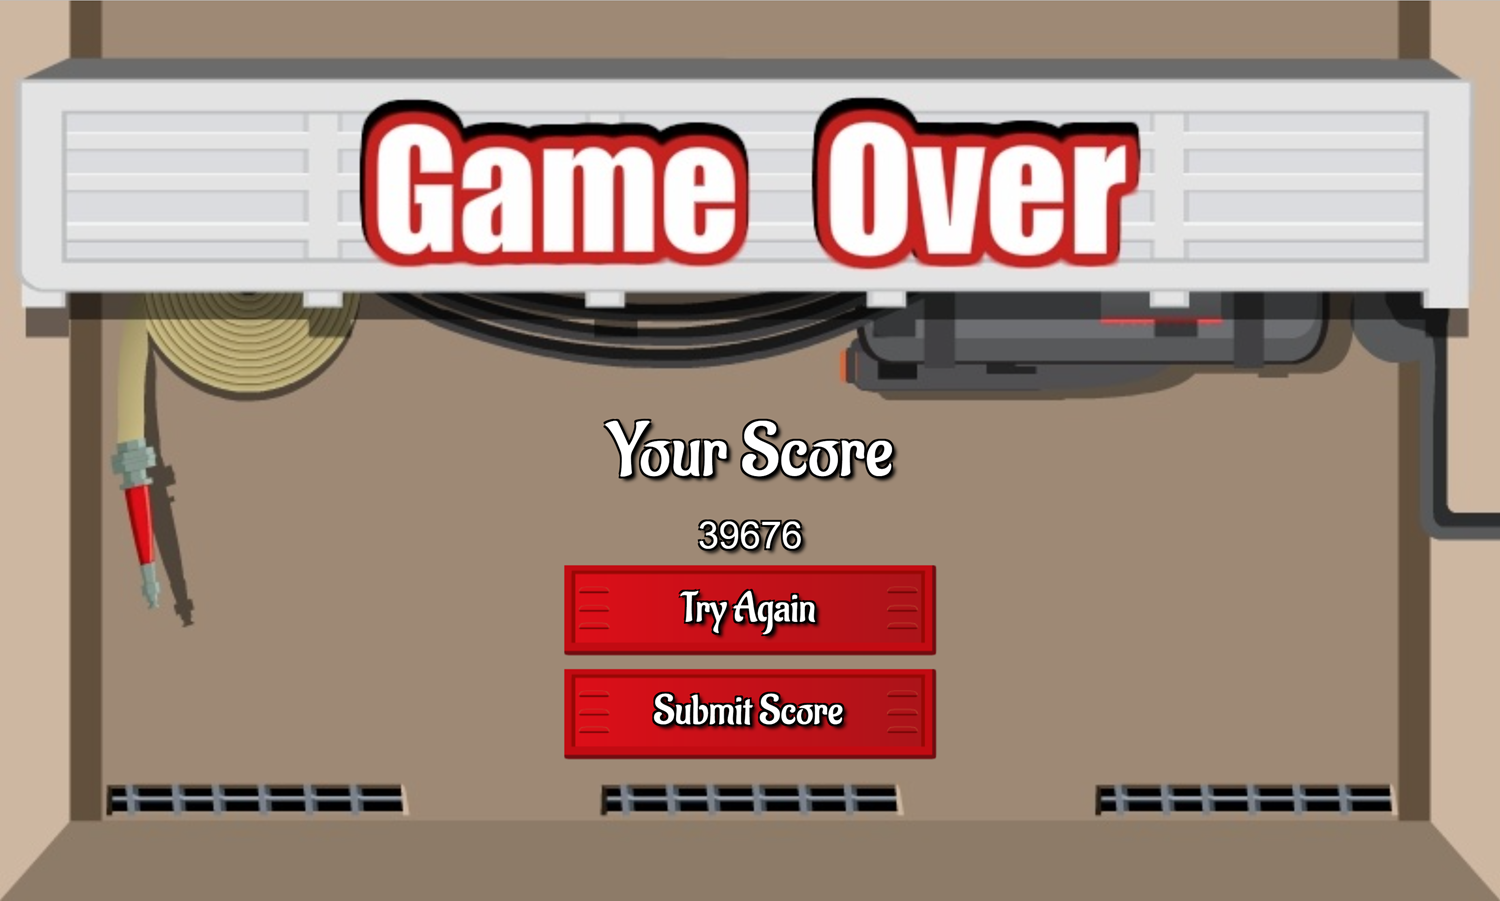 Firemen Solitaire Game Over Screen Screenshot.